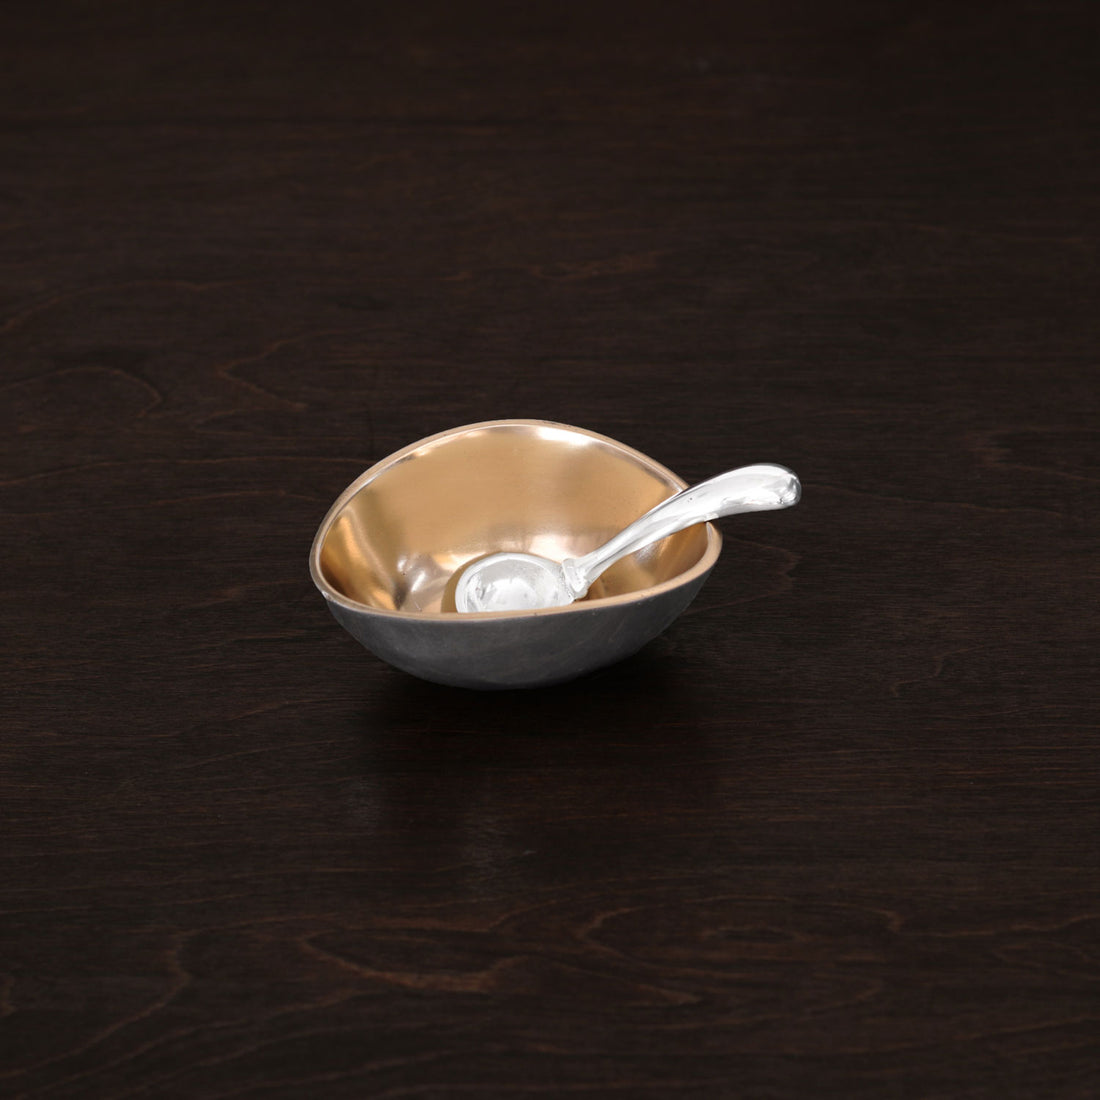 GIFTABLES Sierra Modern Soho Salt Cellar with Spoon (Gold)